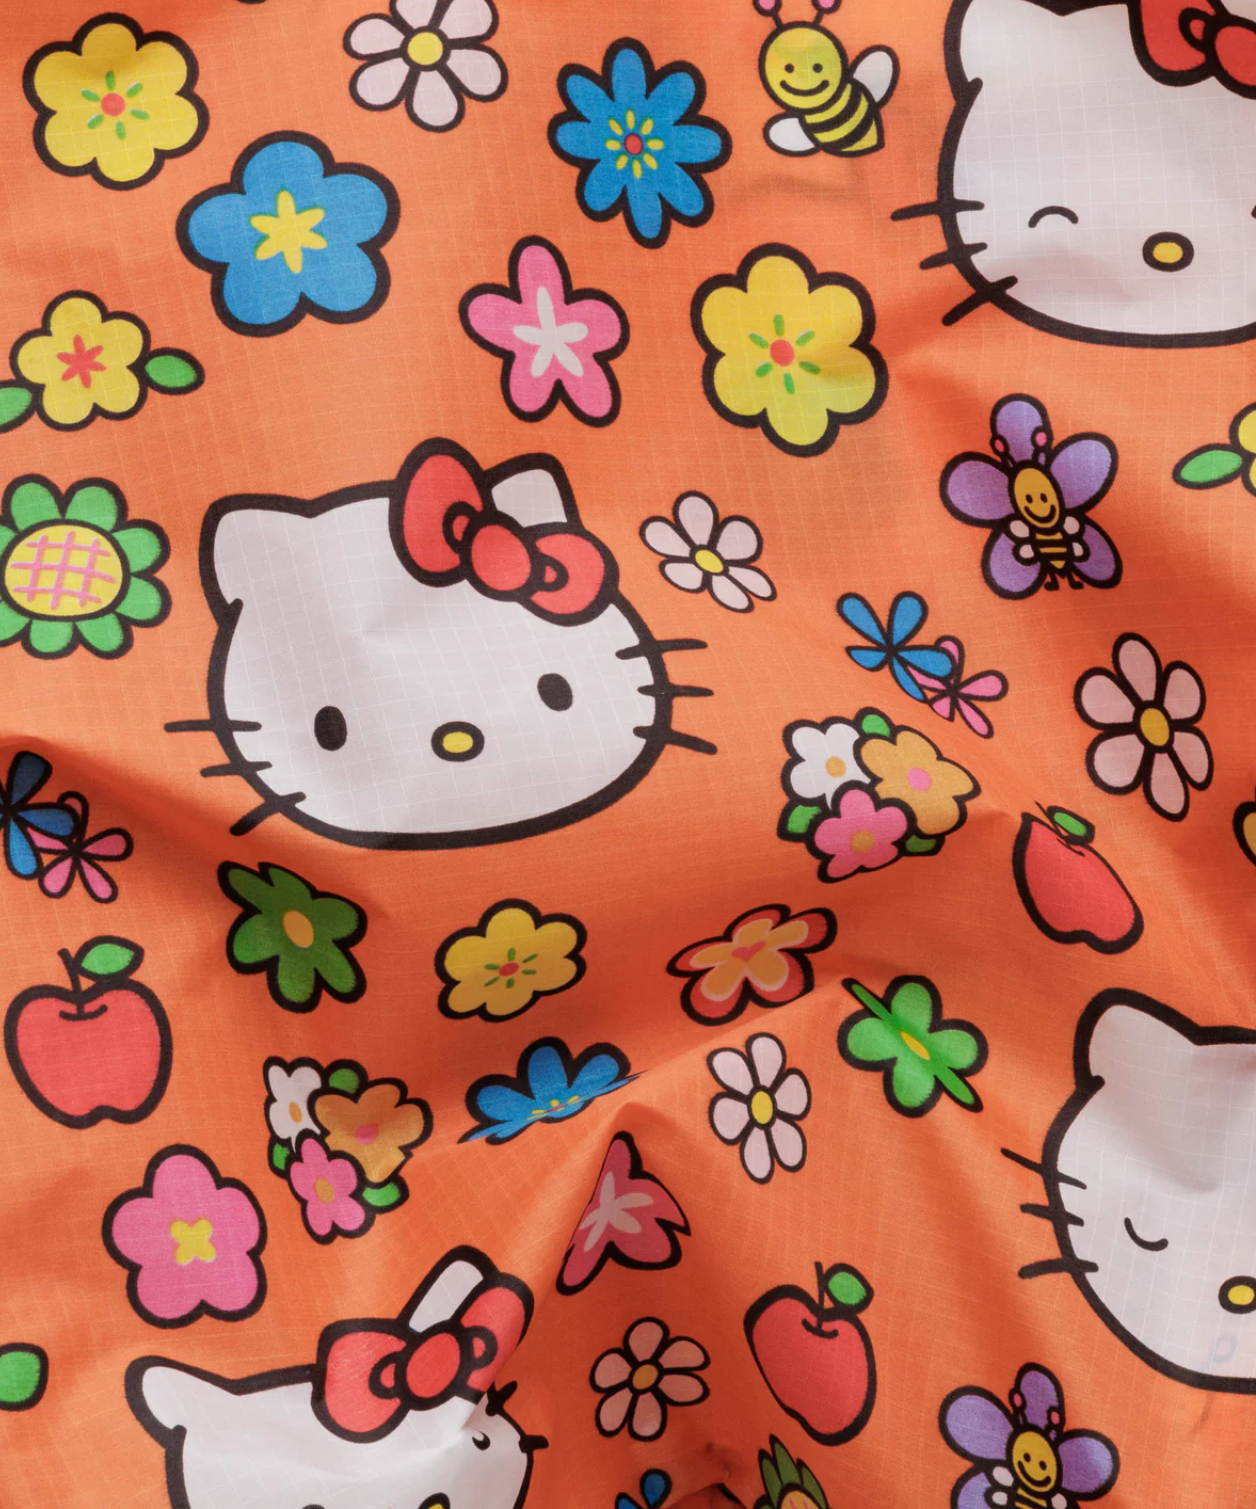 BAGGU Hello Kitty Flower Icons Standard Bag